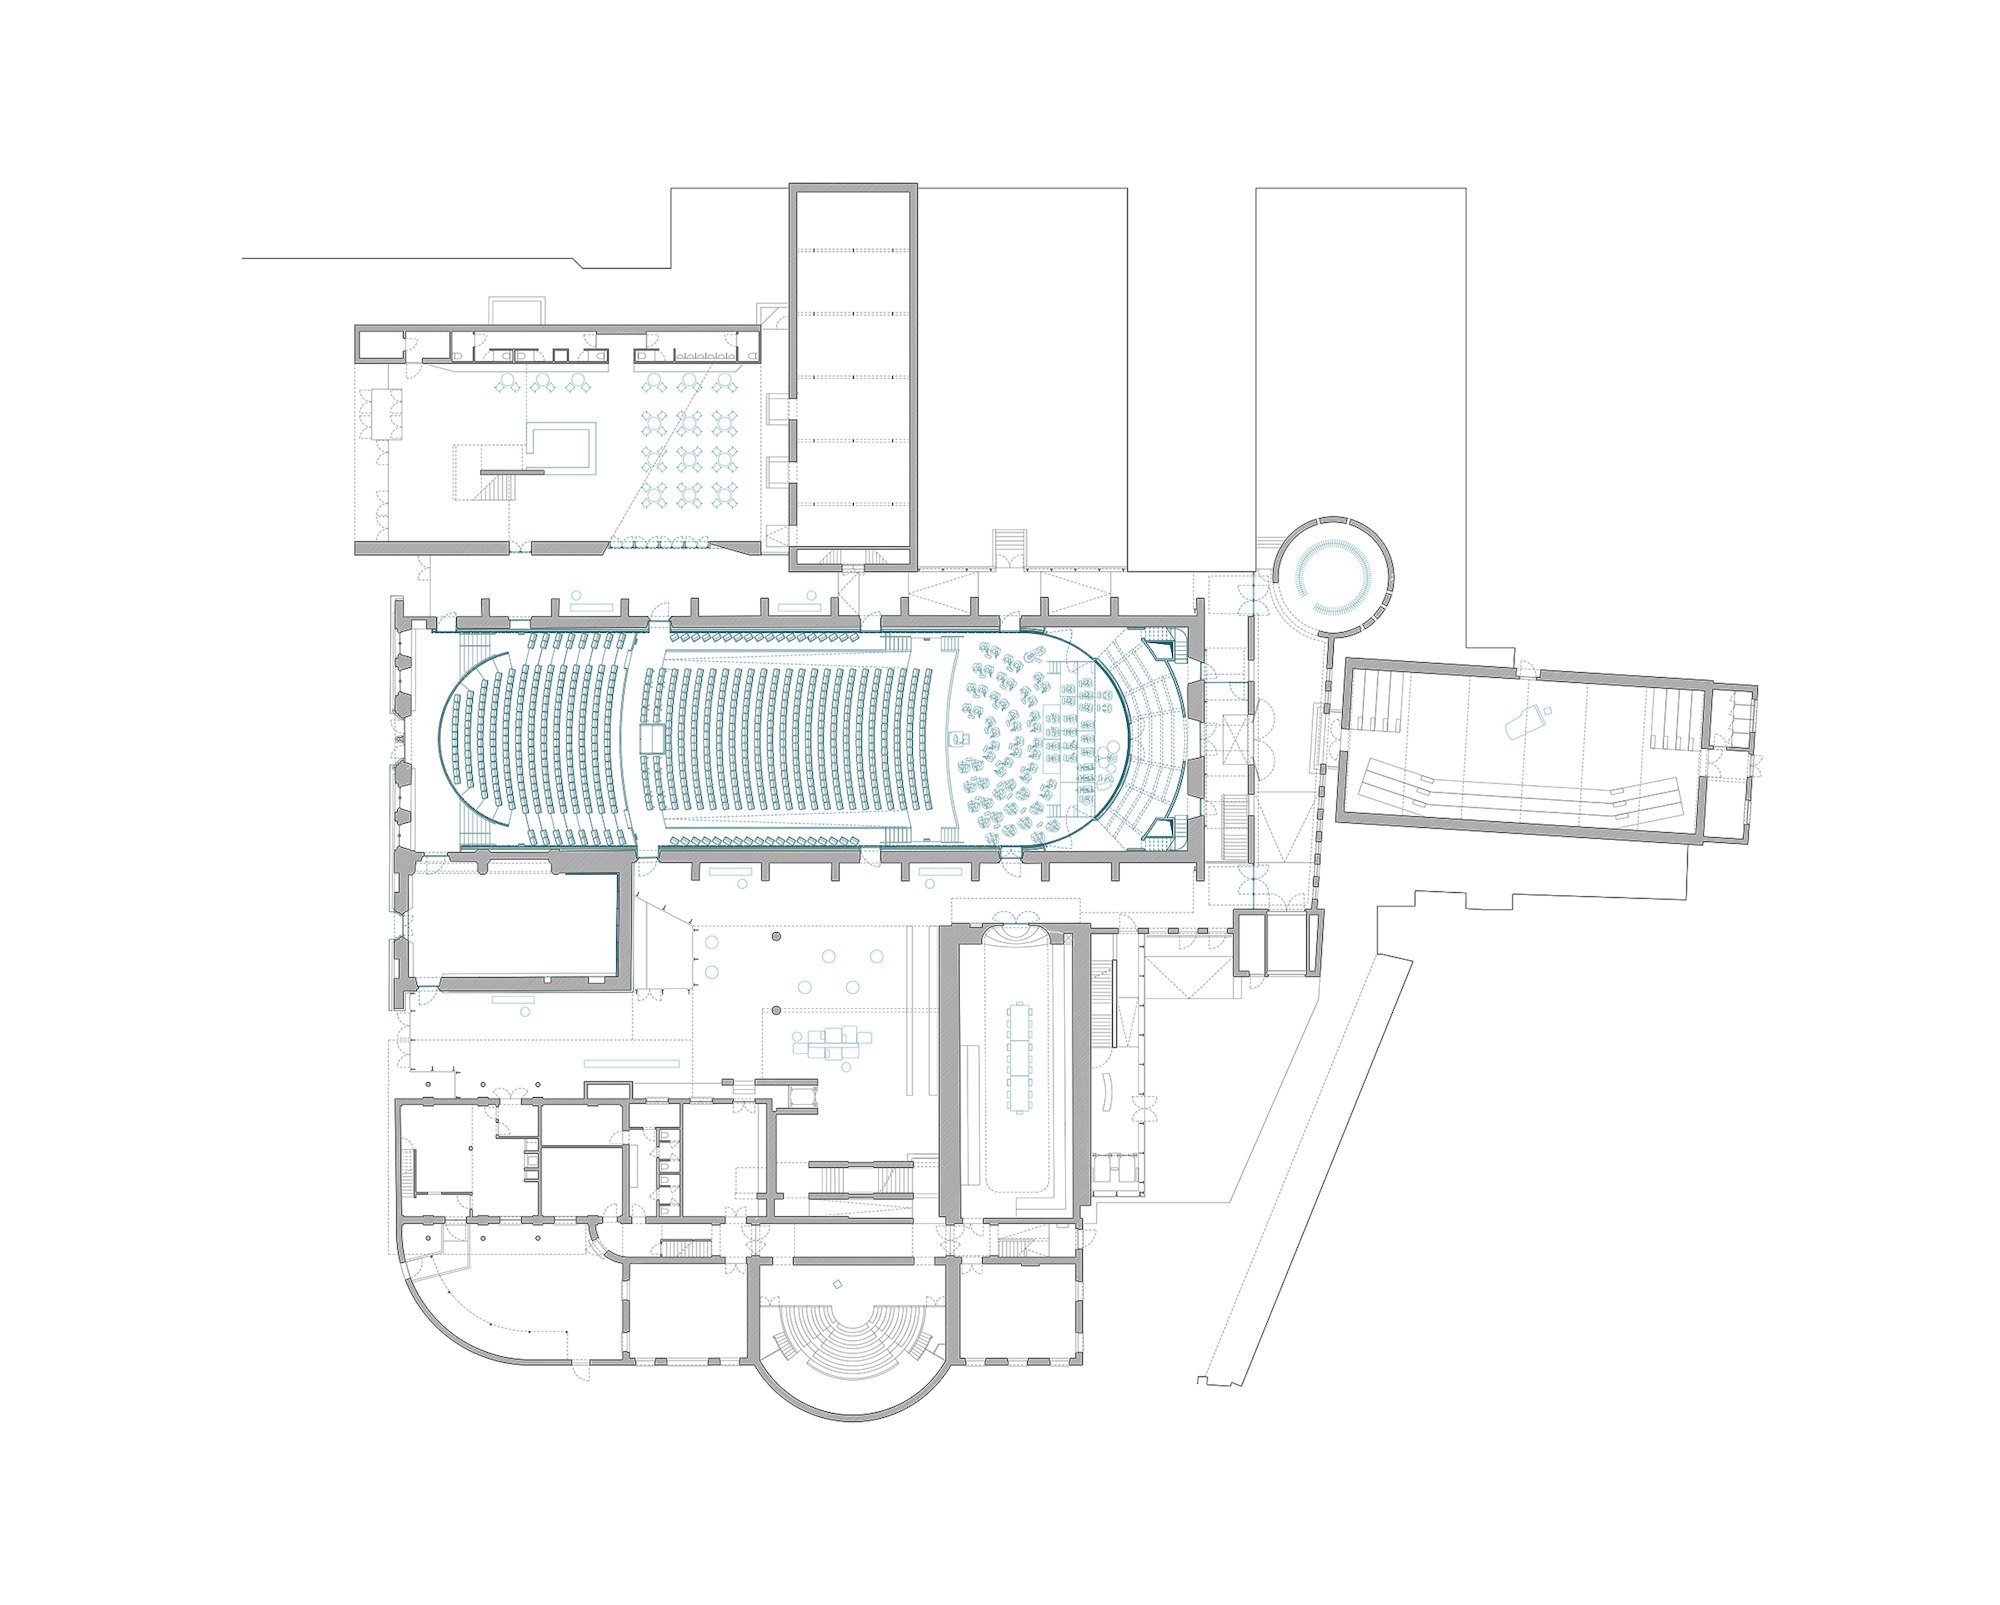 Muziekcentrum De Bijloke - Masterplan © DRDH Architects